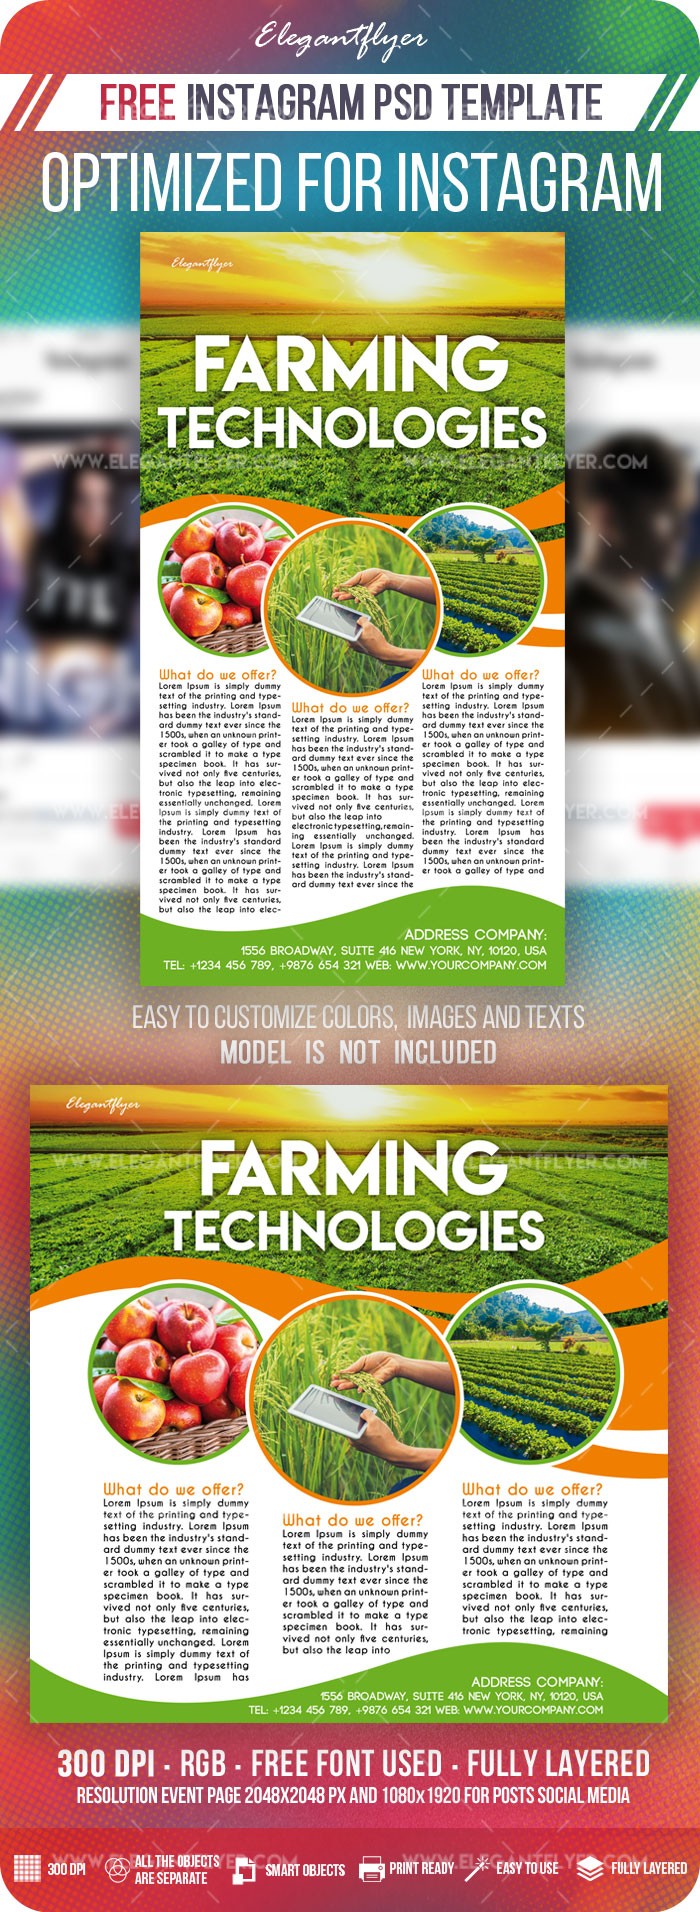 Farming Technologies Instagram: Technologie Rolnicze Instagram by ElegantFlyer